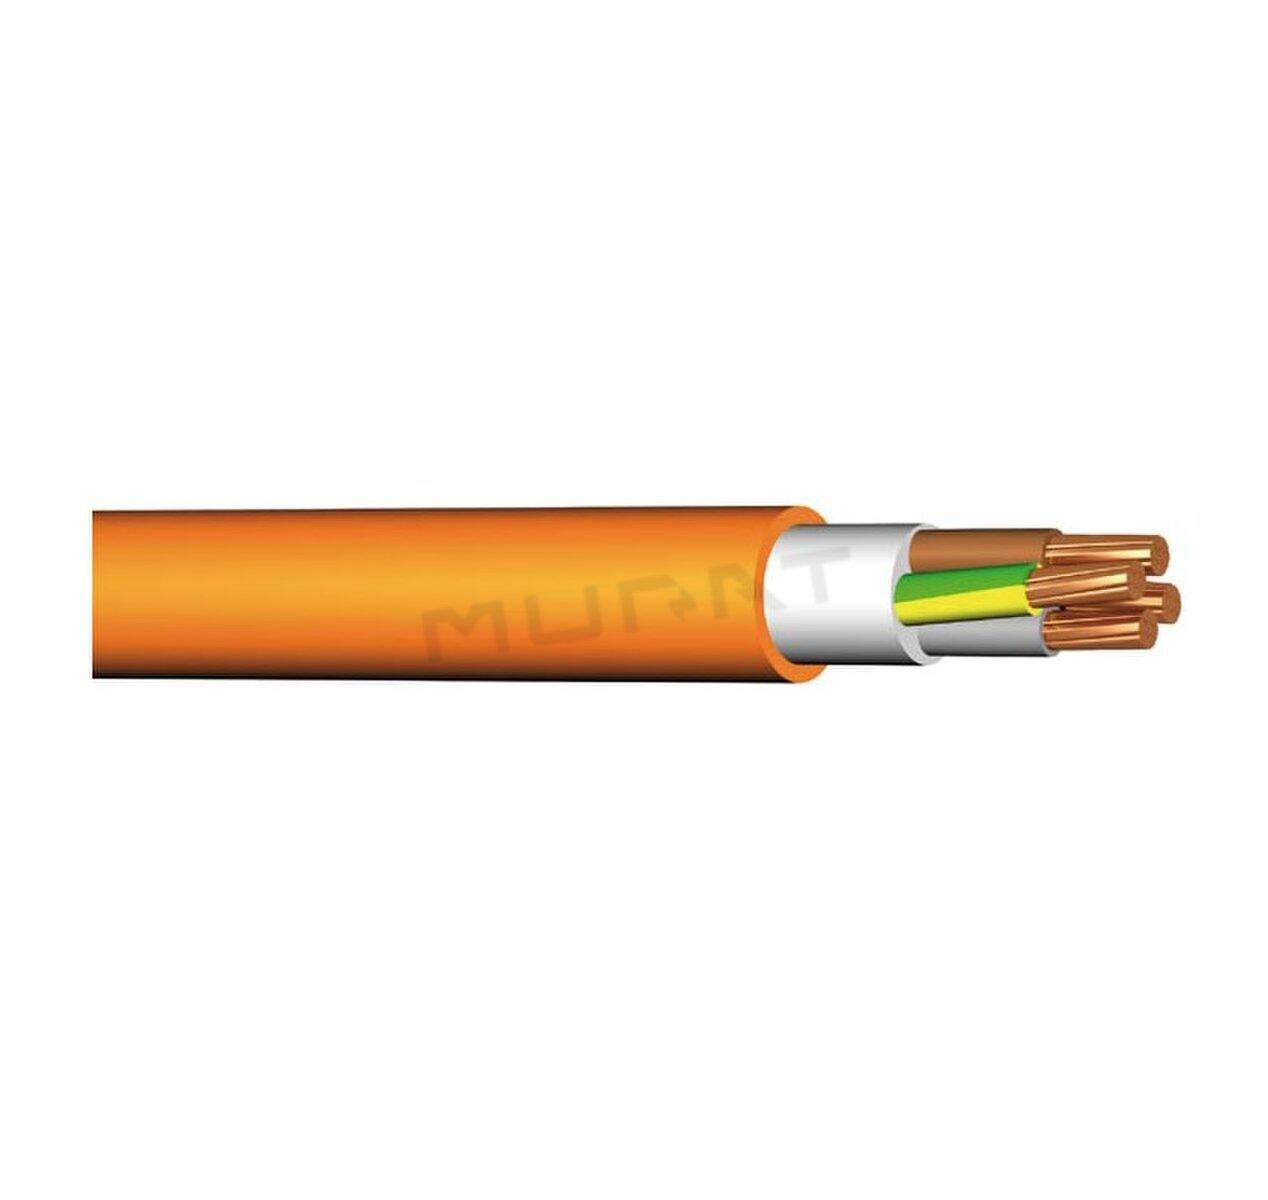 Kábel PRAFlaSafe X-J 1x300 mm2 RM B2ca s1d1a1